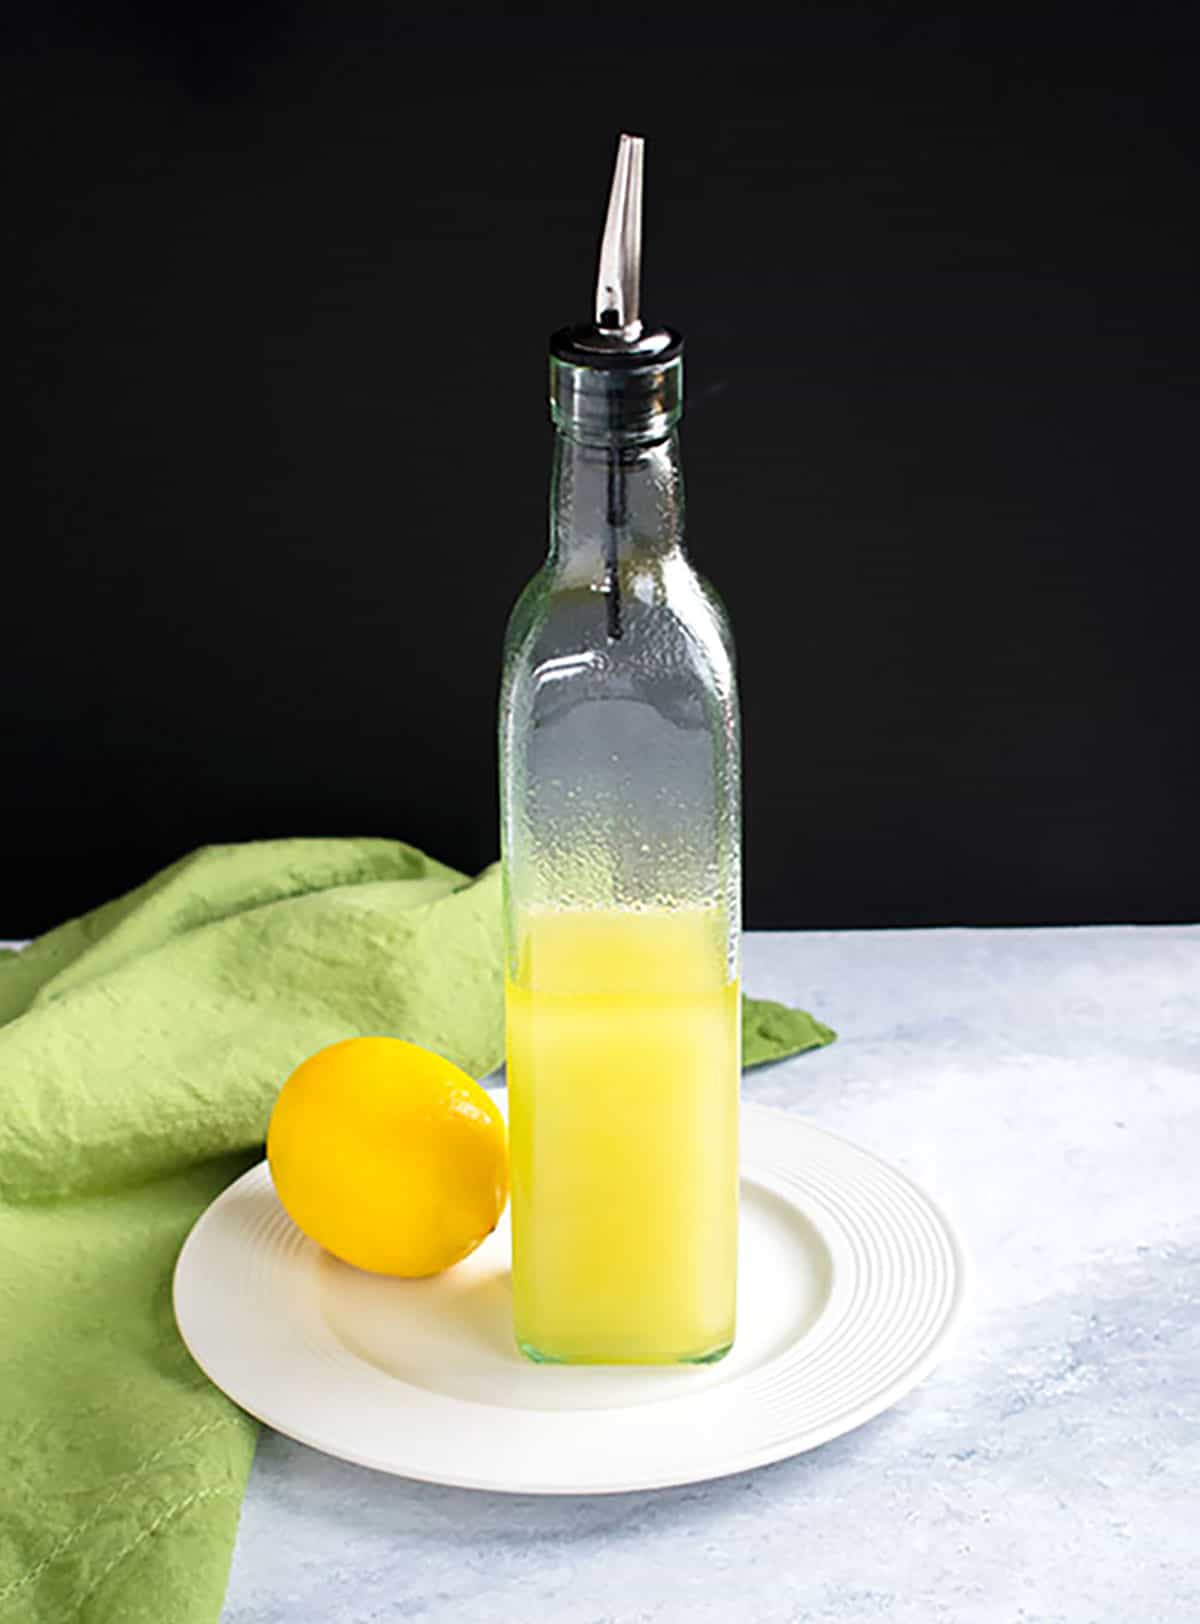 bottle of lemon olive oil on a plate with a lemon